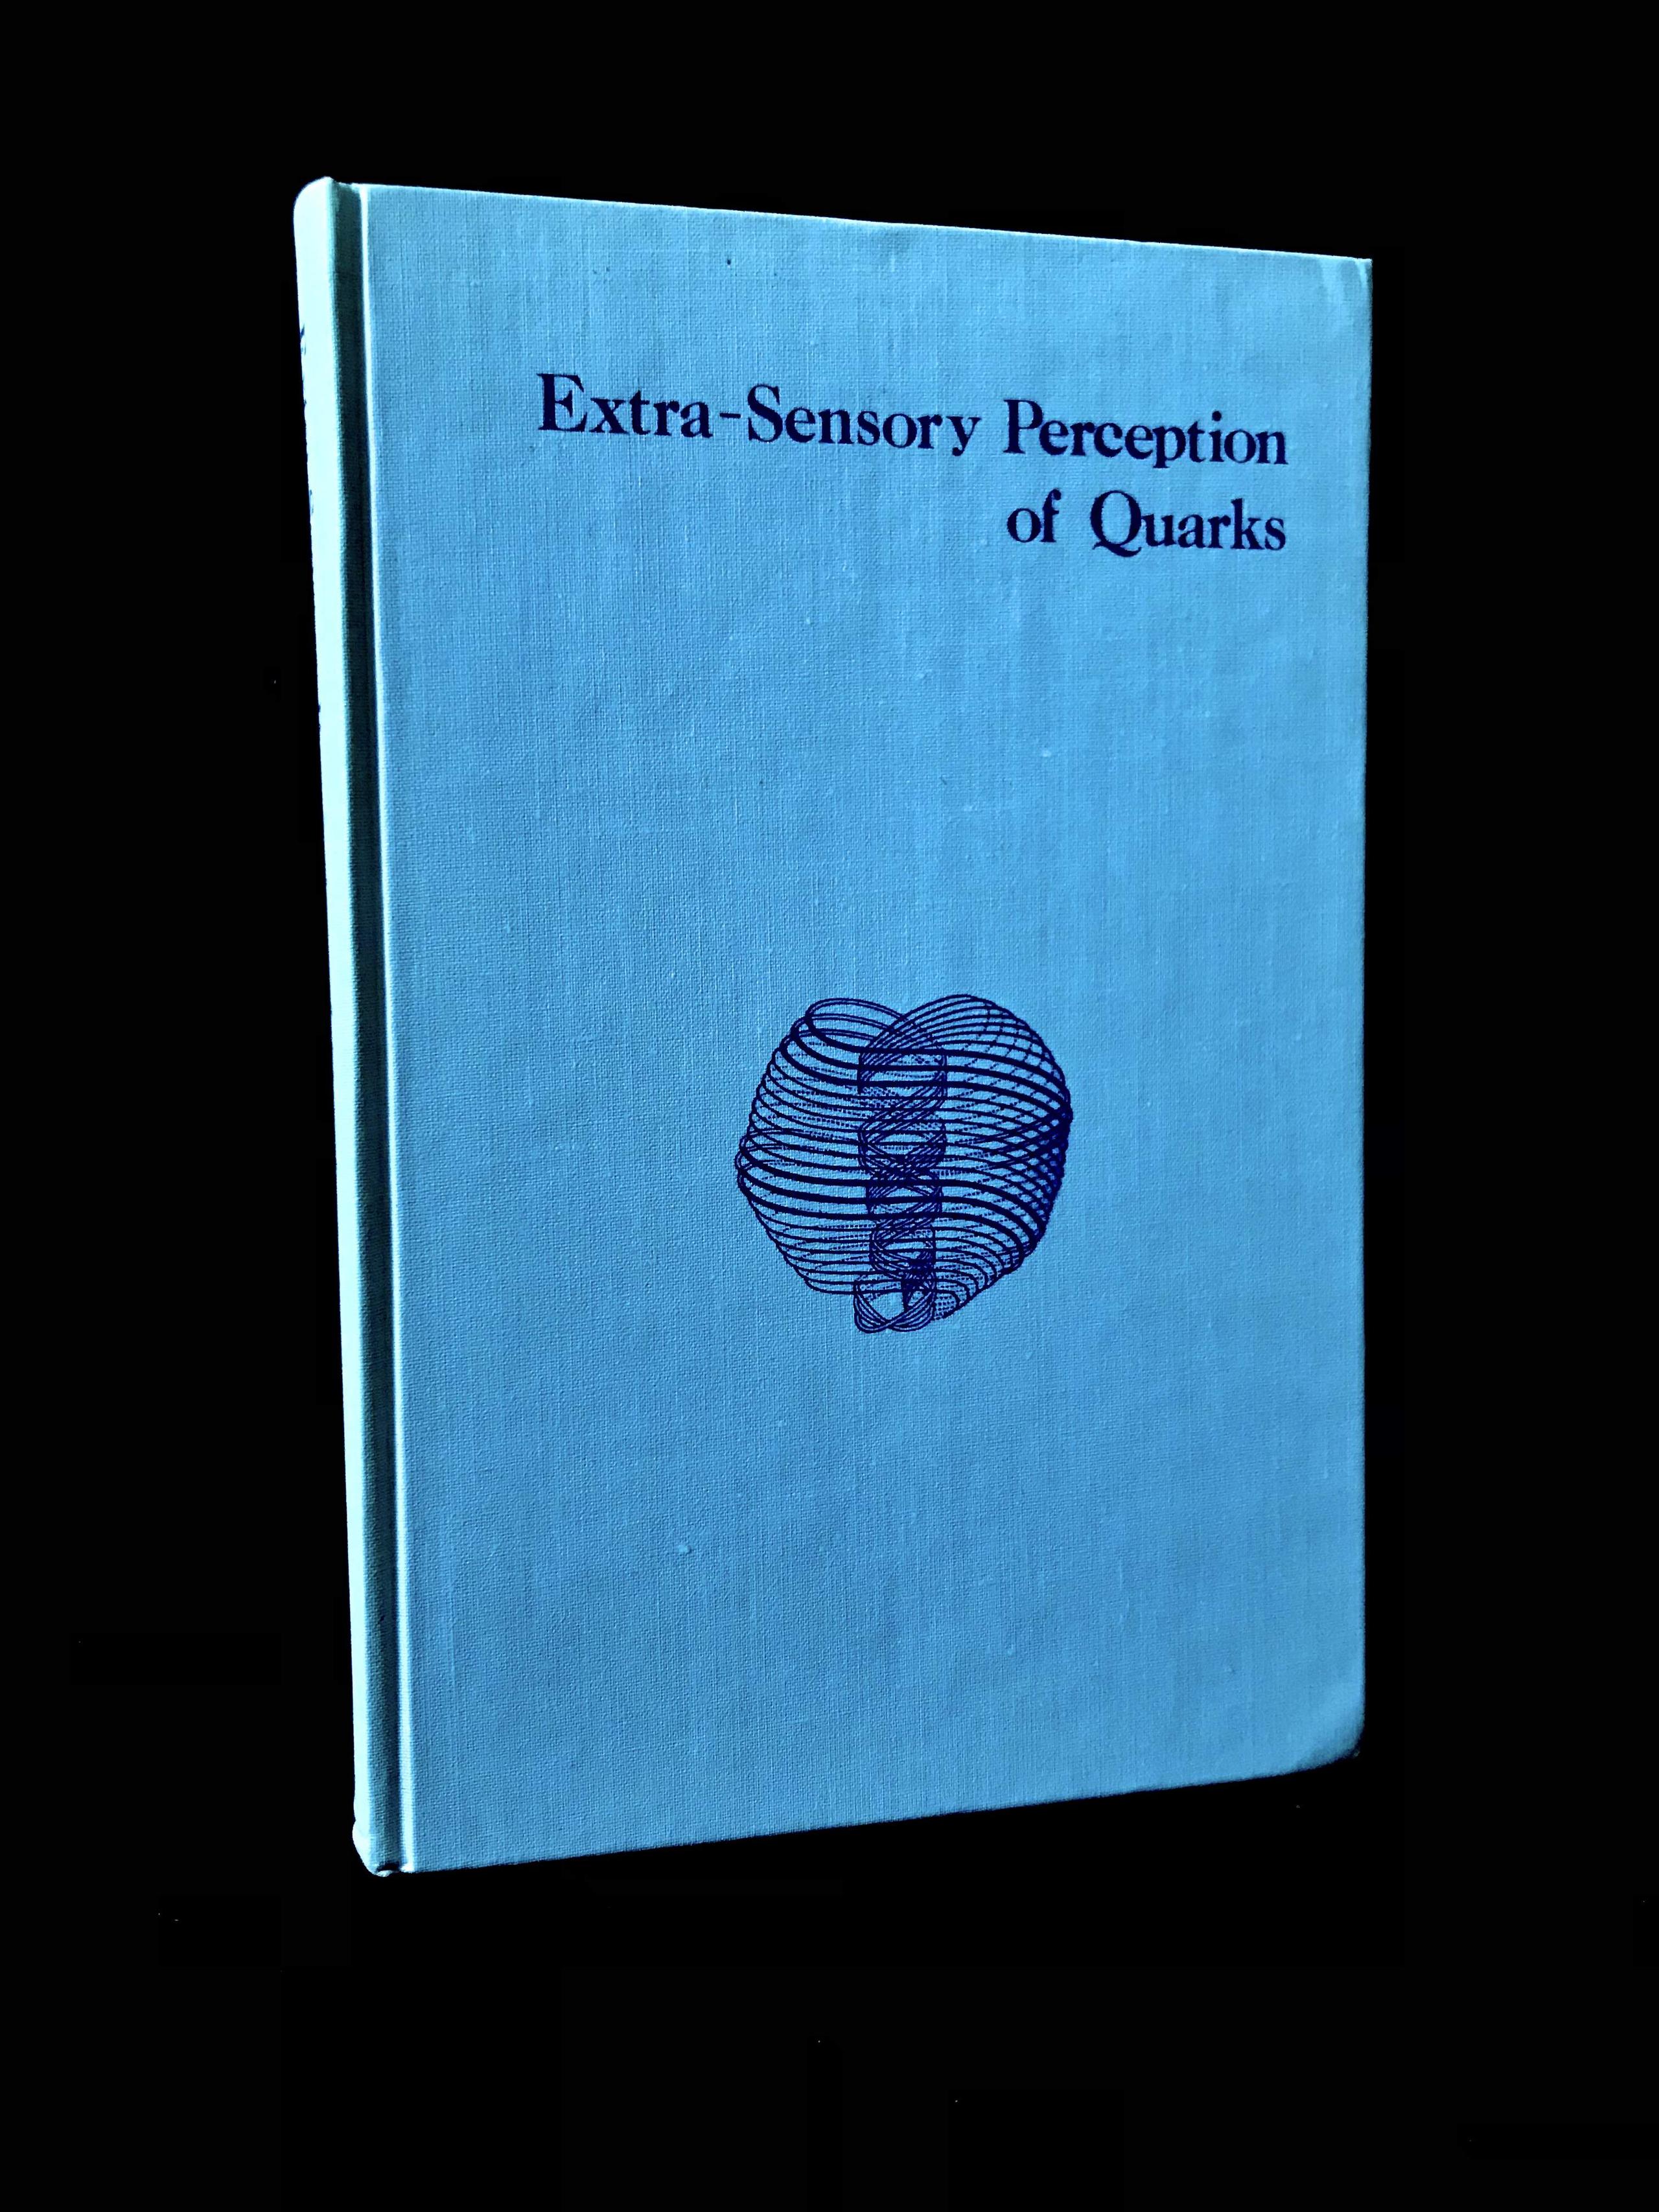 Extra- Sensory Perception of Quarks by Stephen M. Phillips